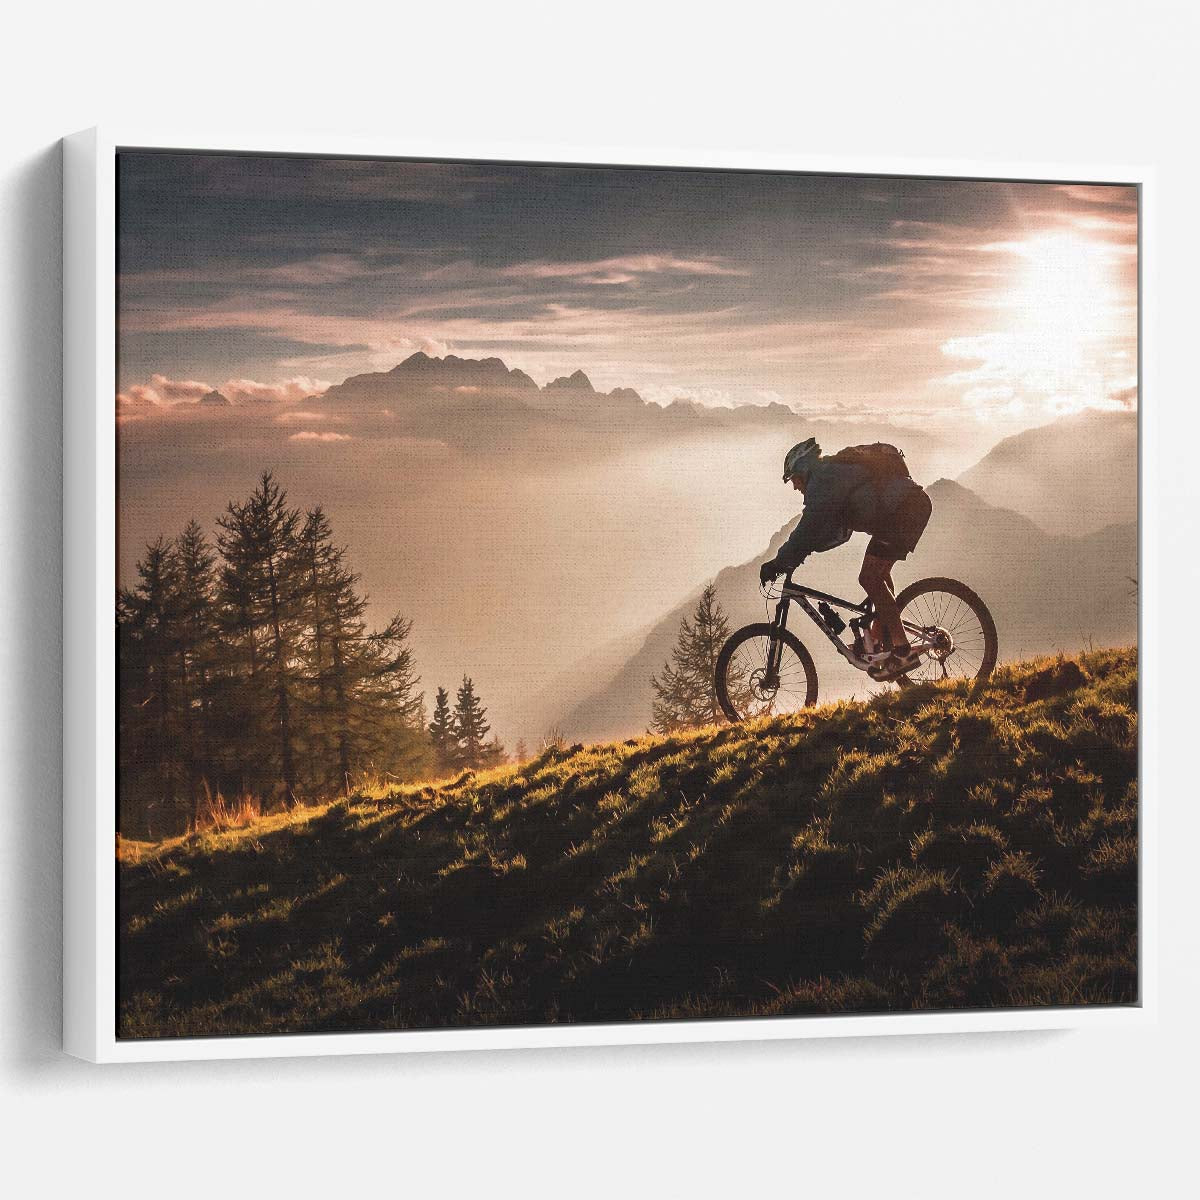 Golden Hour Mountain Biking Adventure - Action Photography Wall Art